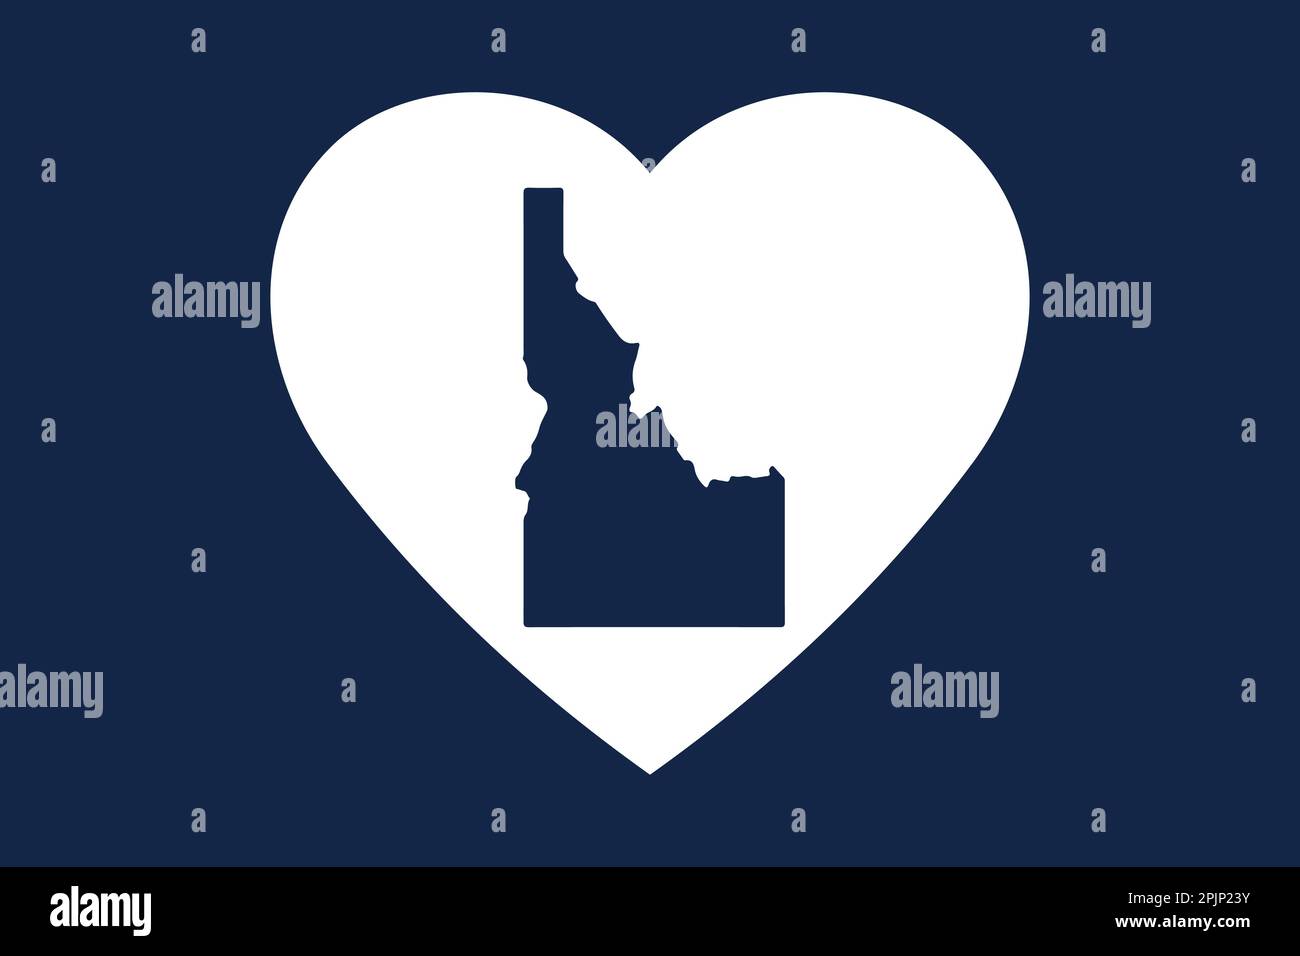 US American state inside the heart shape. Idaho state. Patriotic heart symbol. Love America symbol. Vector illustration Stock Vector